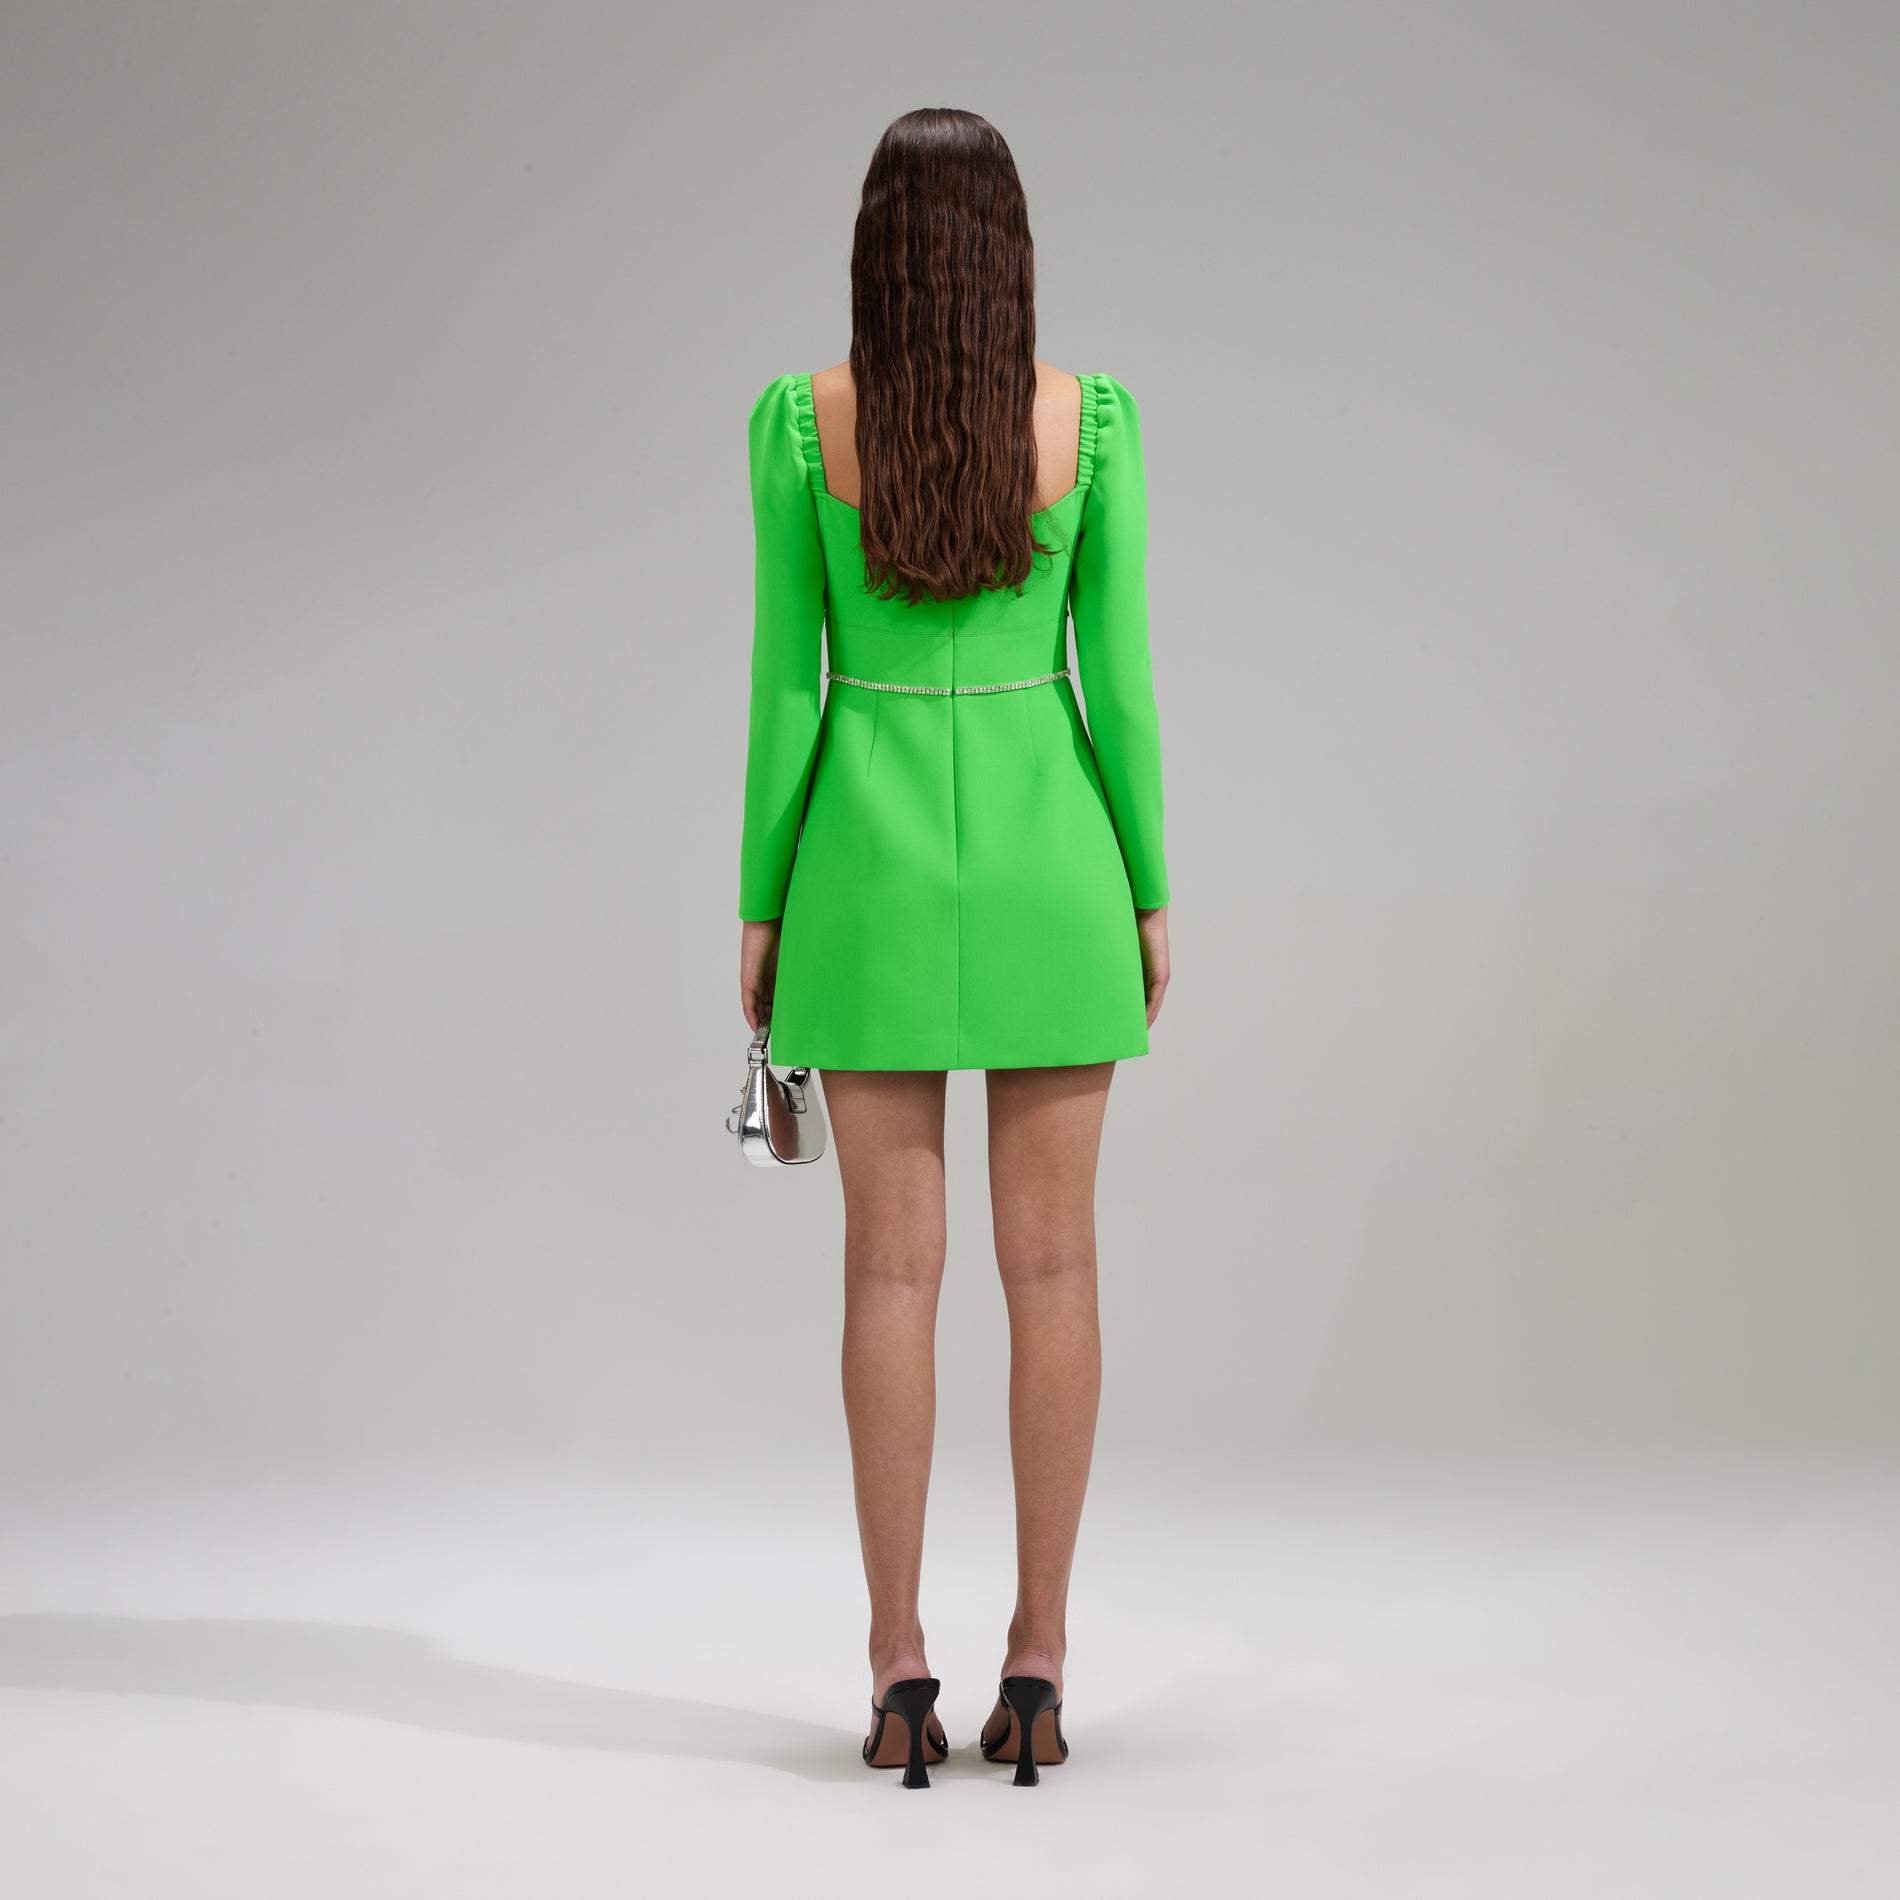 A woman wearing the Green Crepe Rhinestone Detail Mini Dress